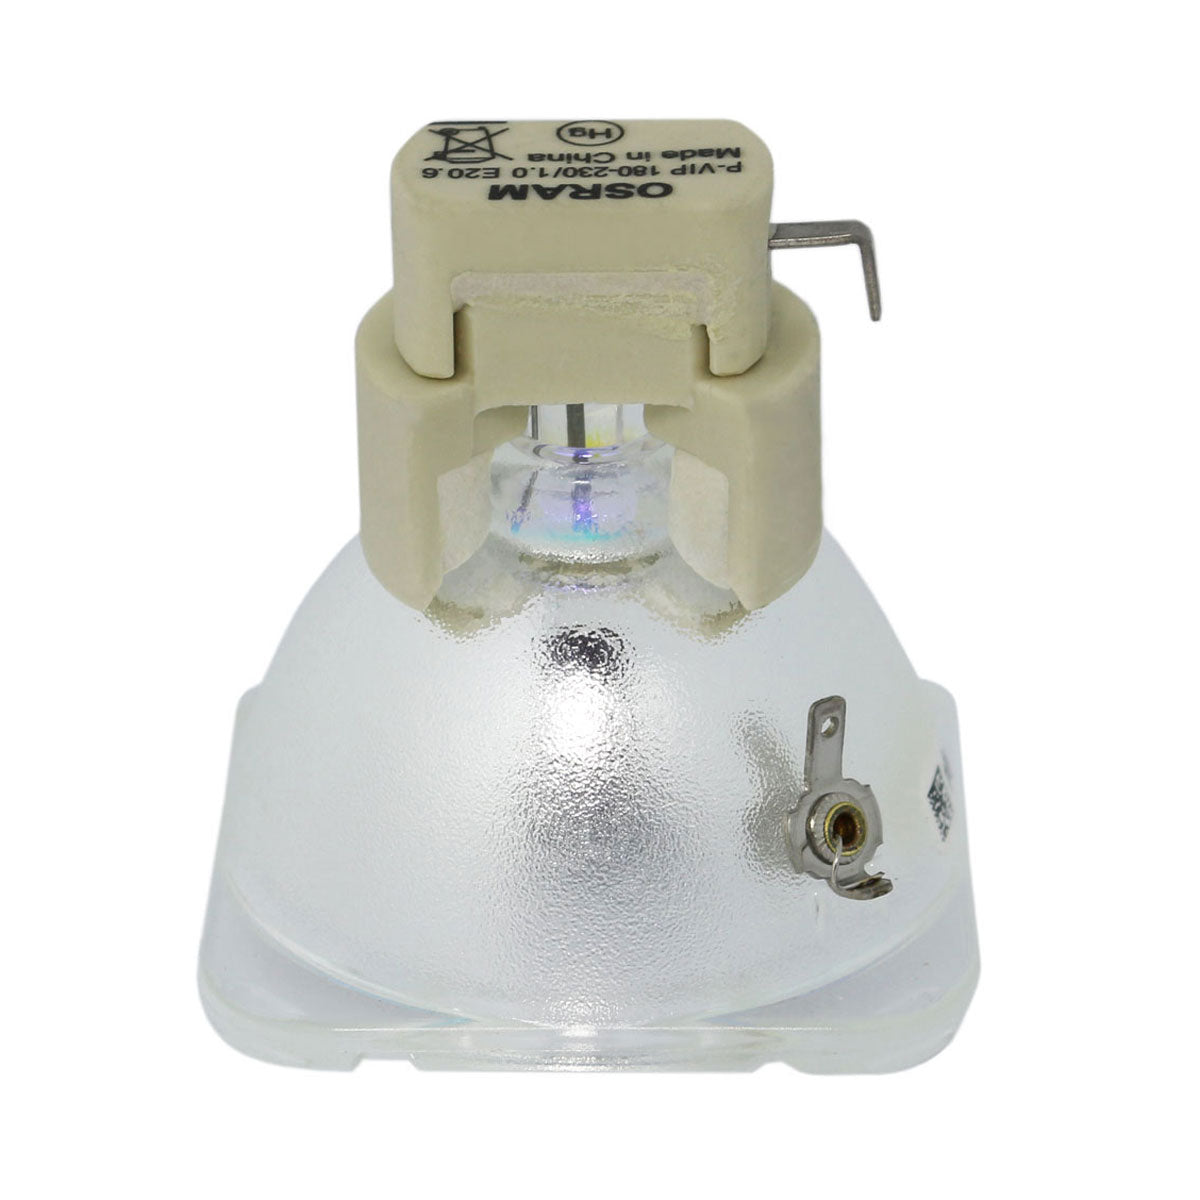 Eiki P8384-1001 Osram Projector Bare Lamp